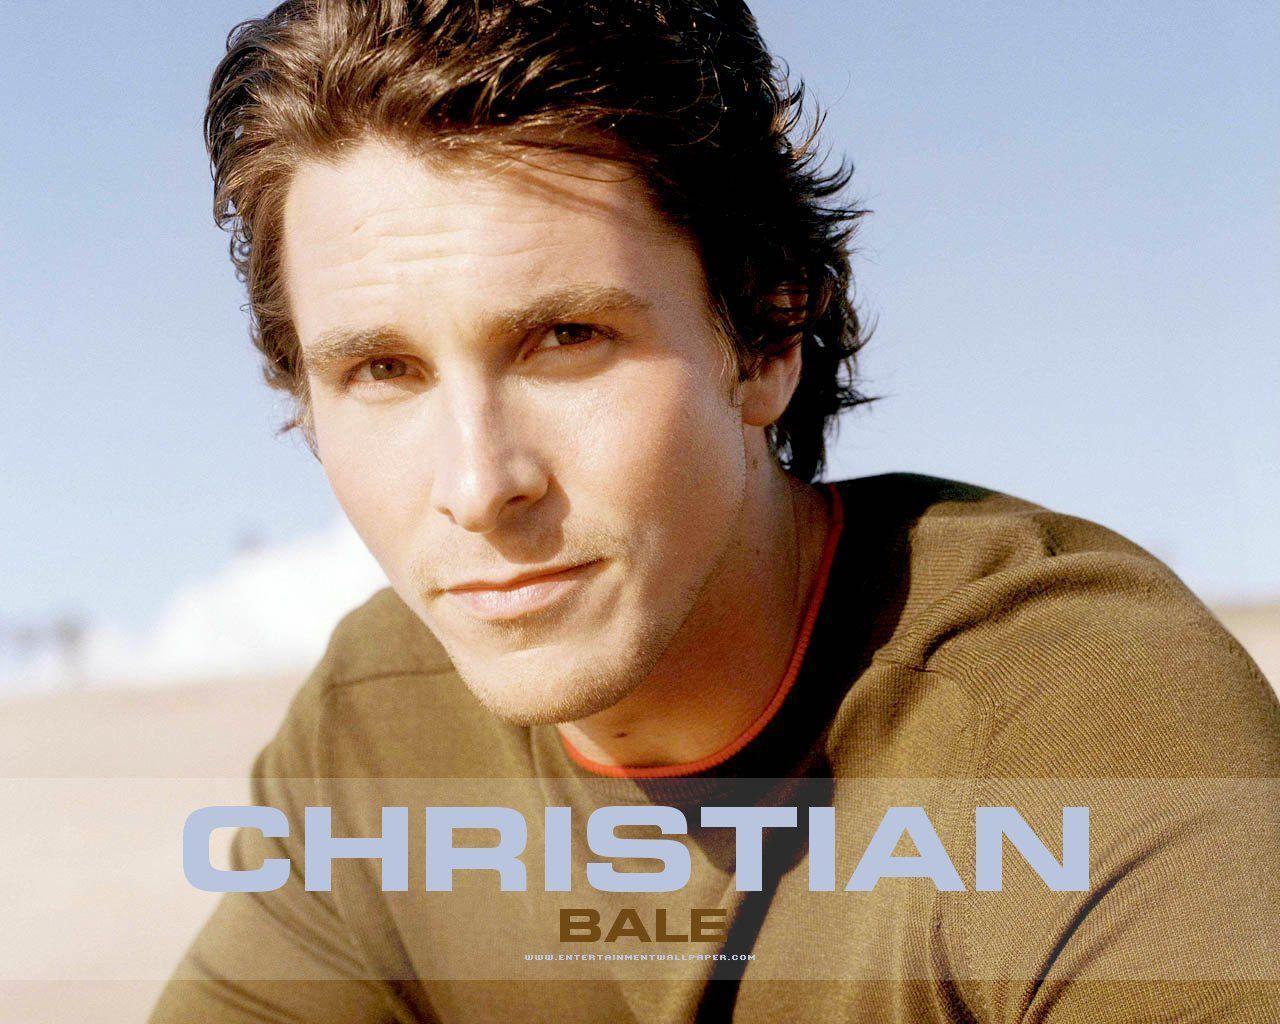 Christian bale